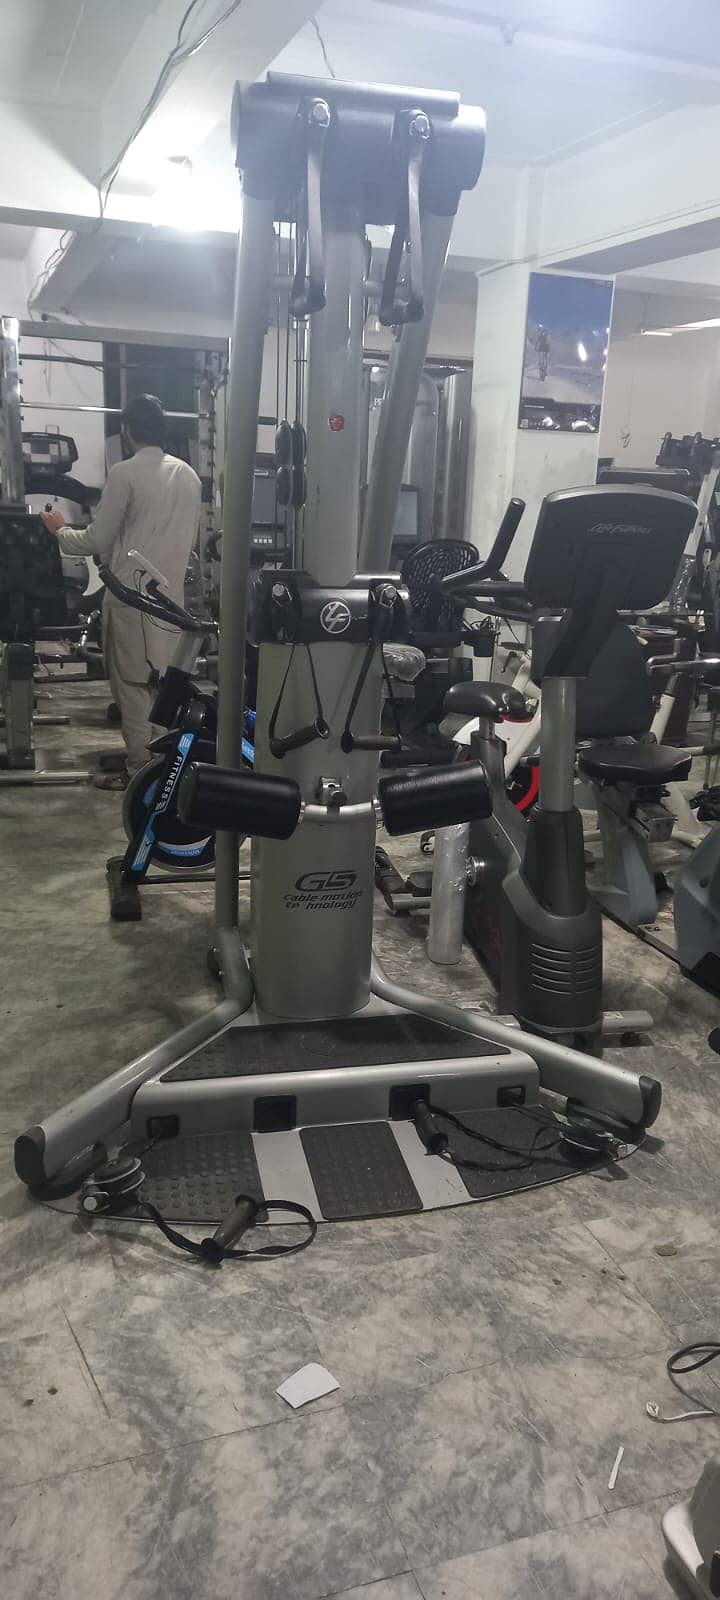 multi functional machine dumbbell gym setup treadmill elliptical plate 8